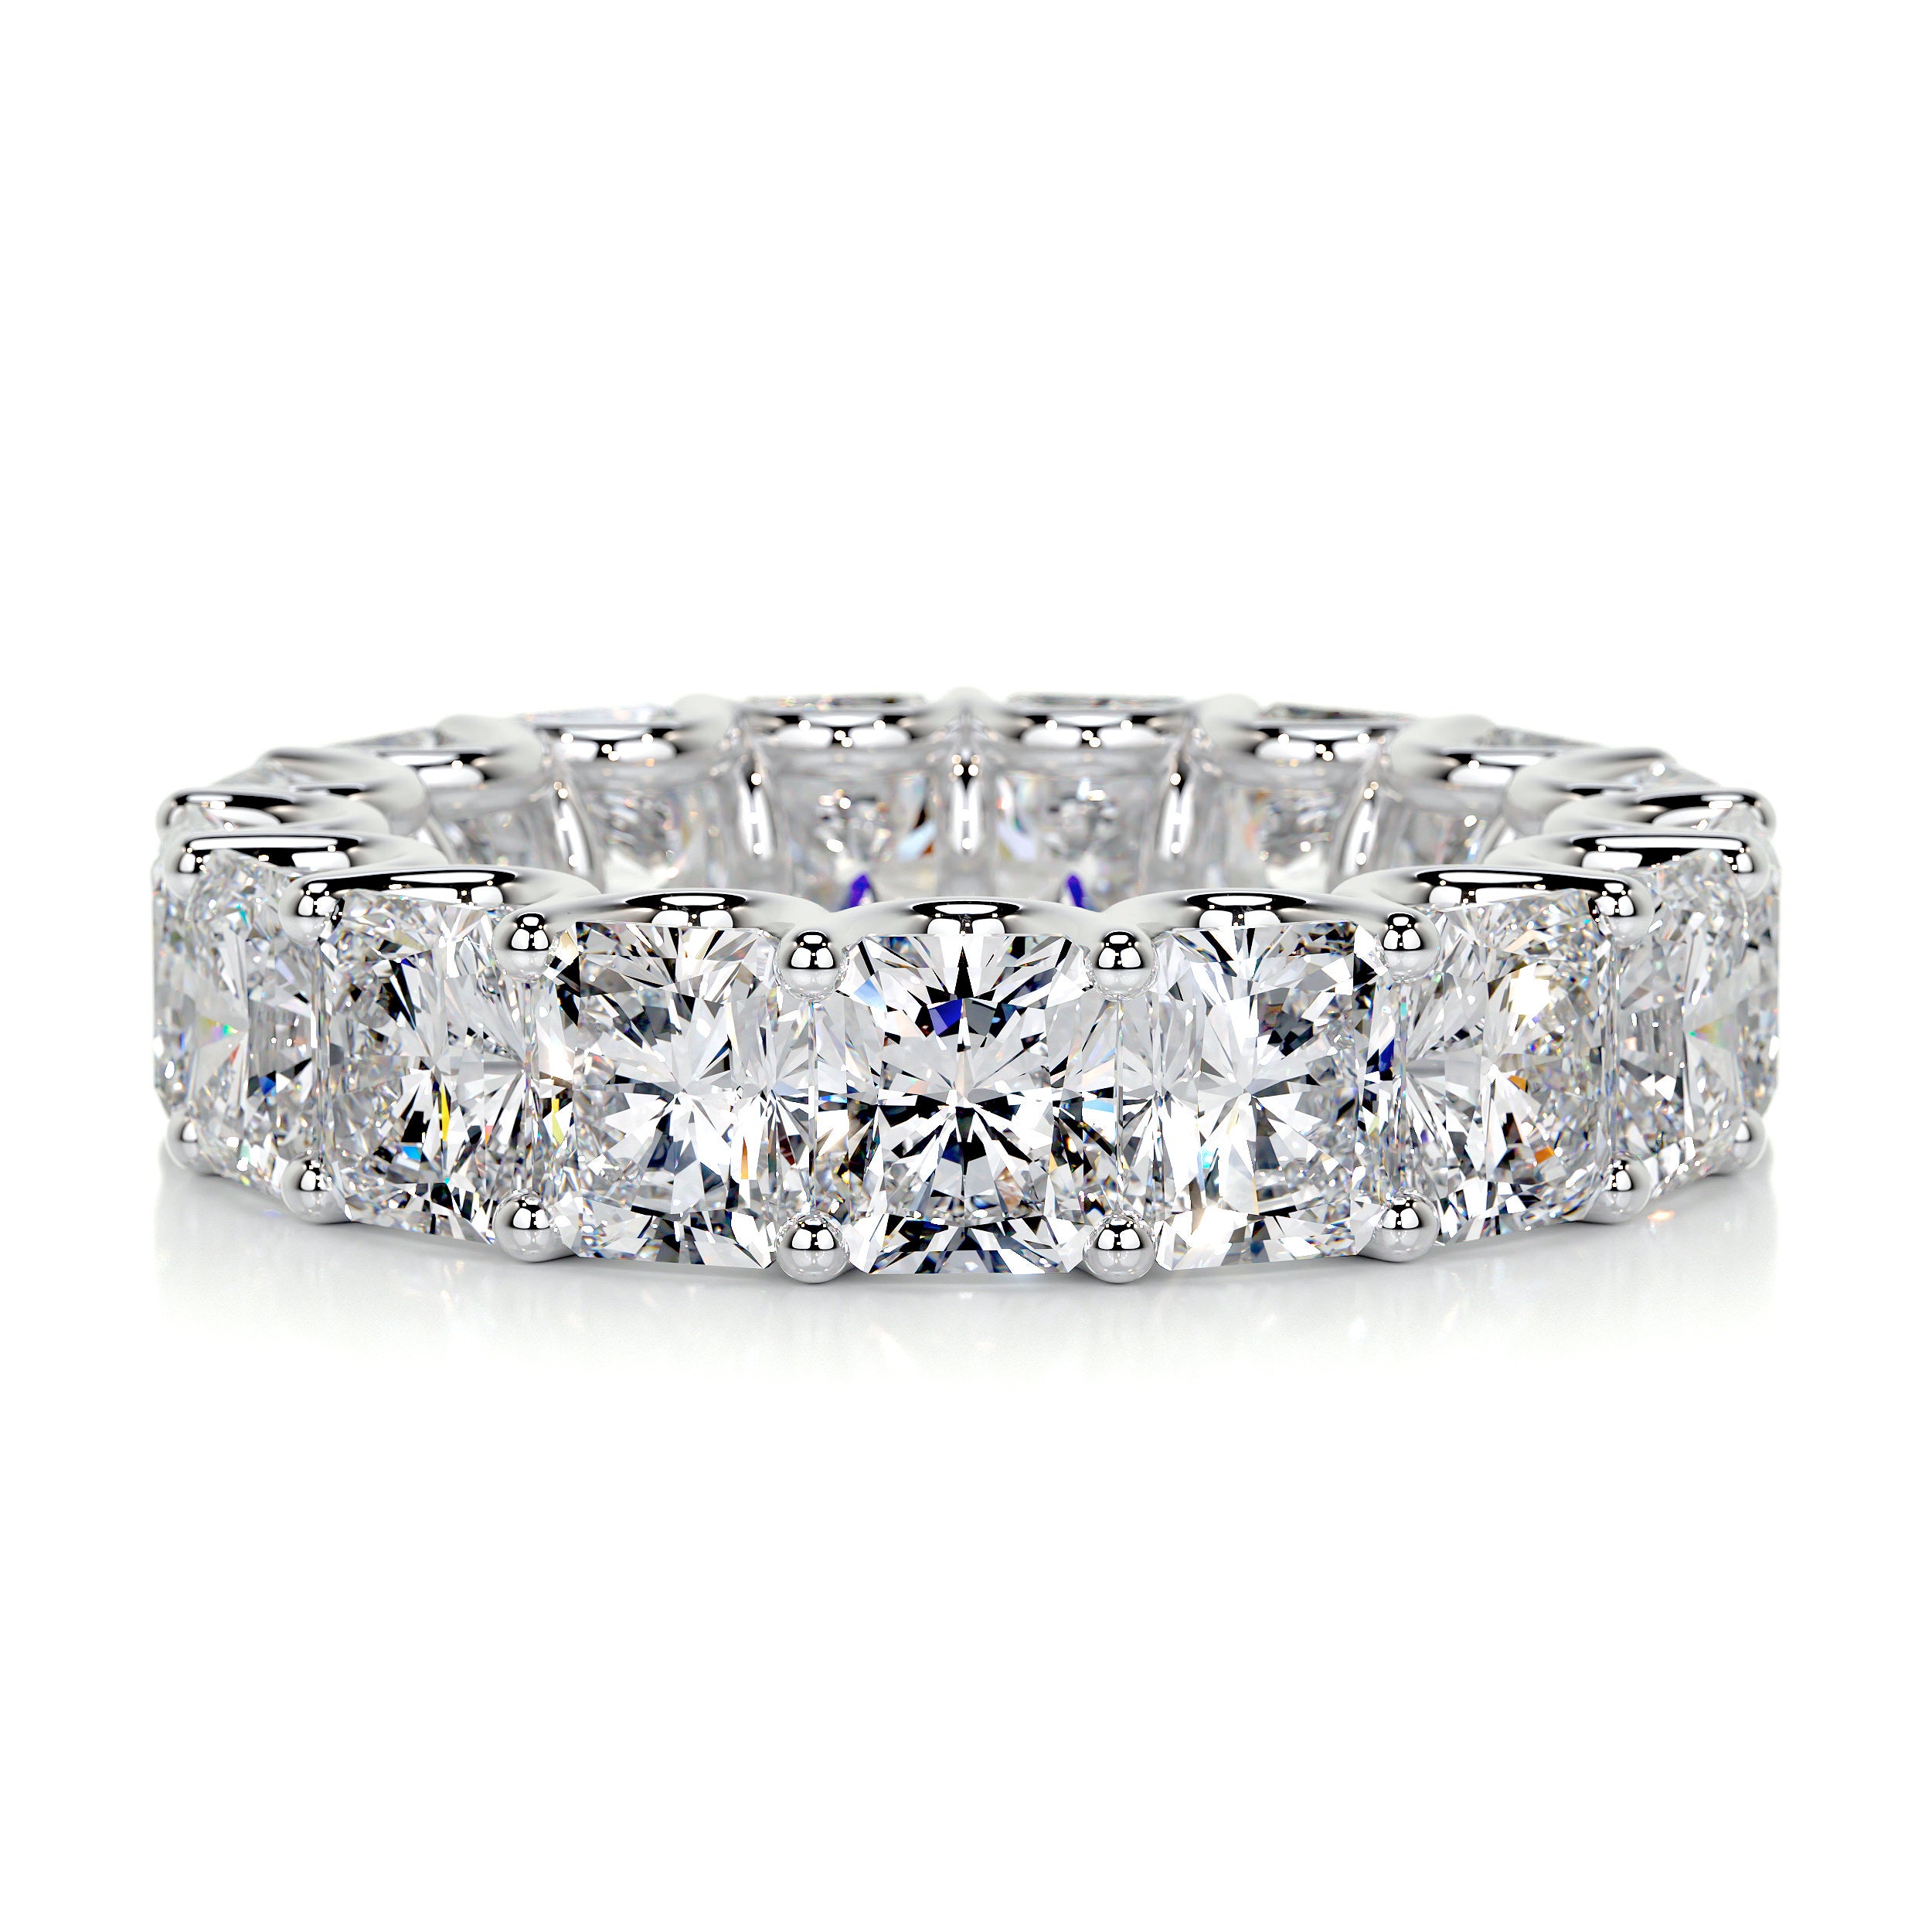 Andi Eternity Wedding Ring   (5 Carat) - 14K White Gold